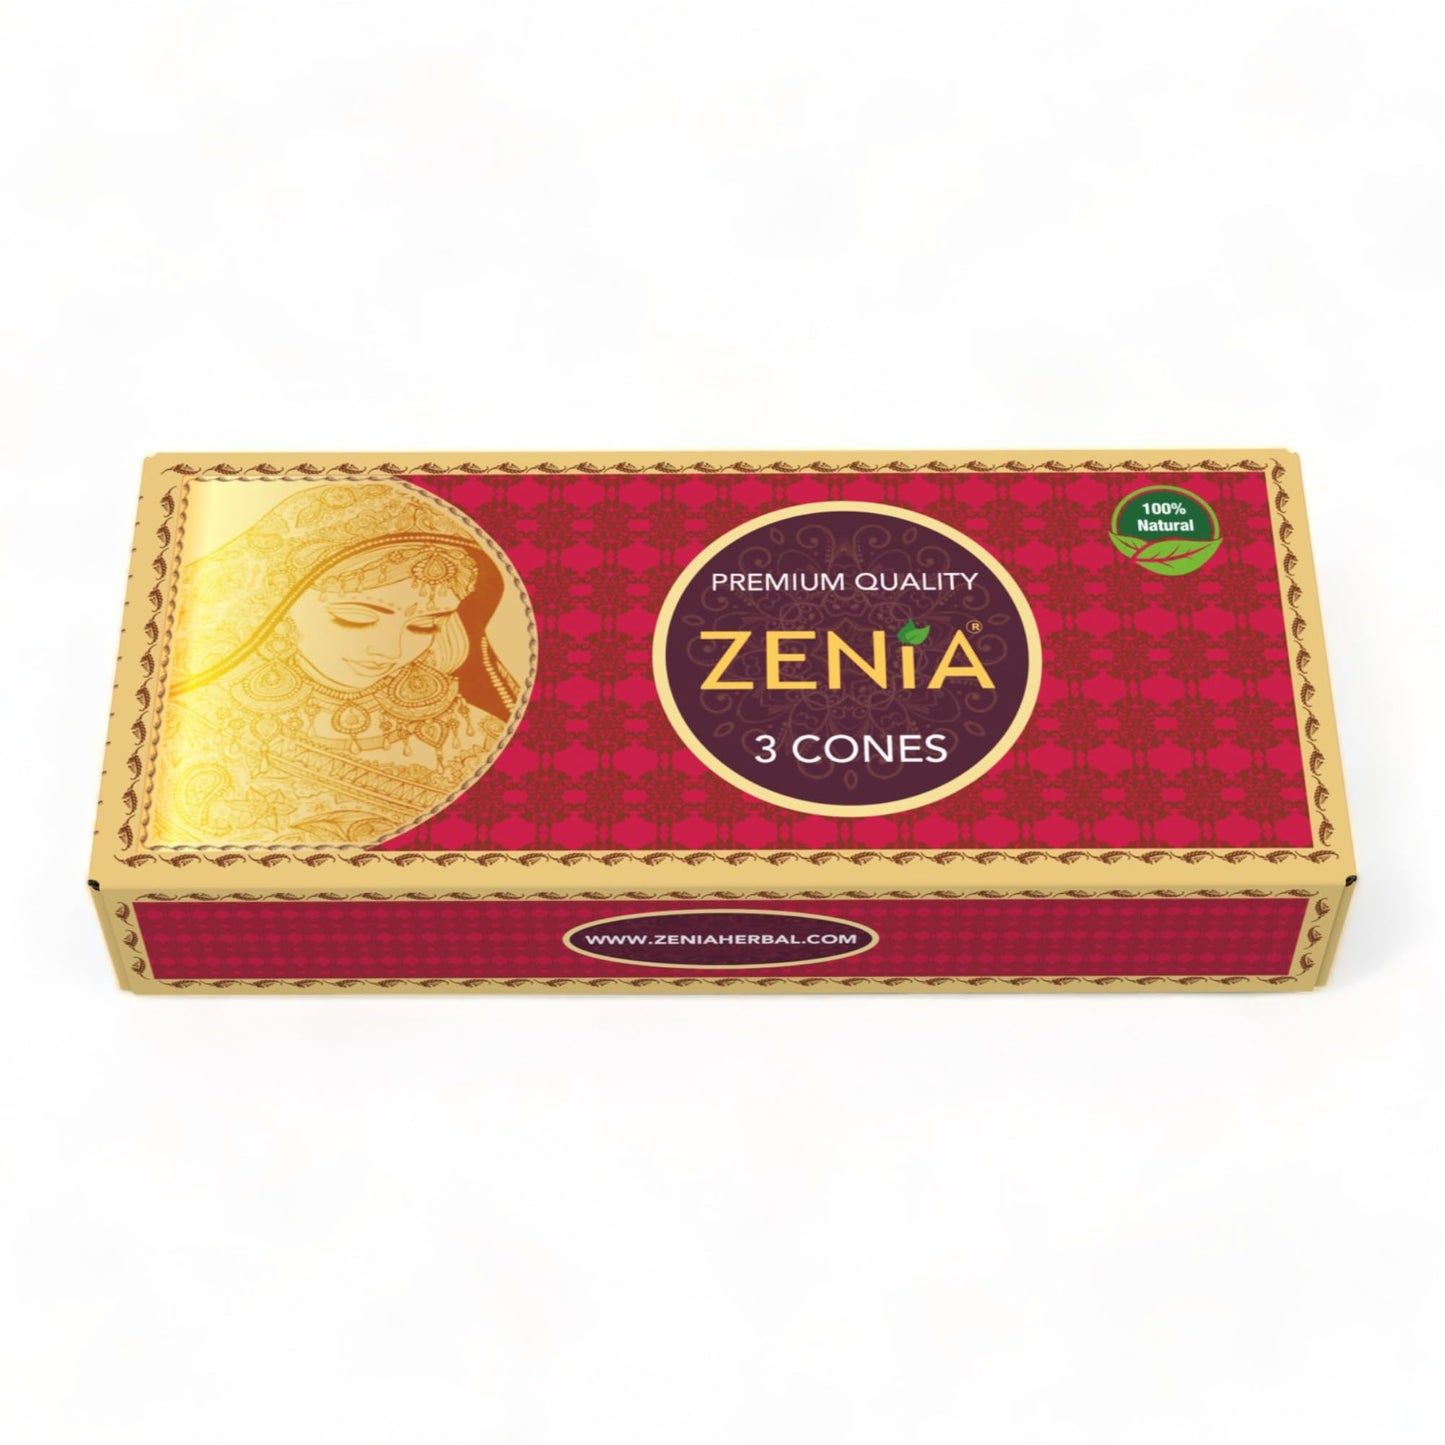 Zenia (Pack of 3) 100% Natural Henna Hair Color Paste Hair Dye Cones Dark Reddish-Brown Color 25g Each Cone